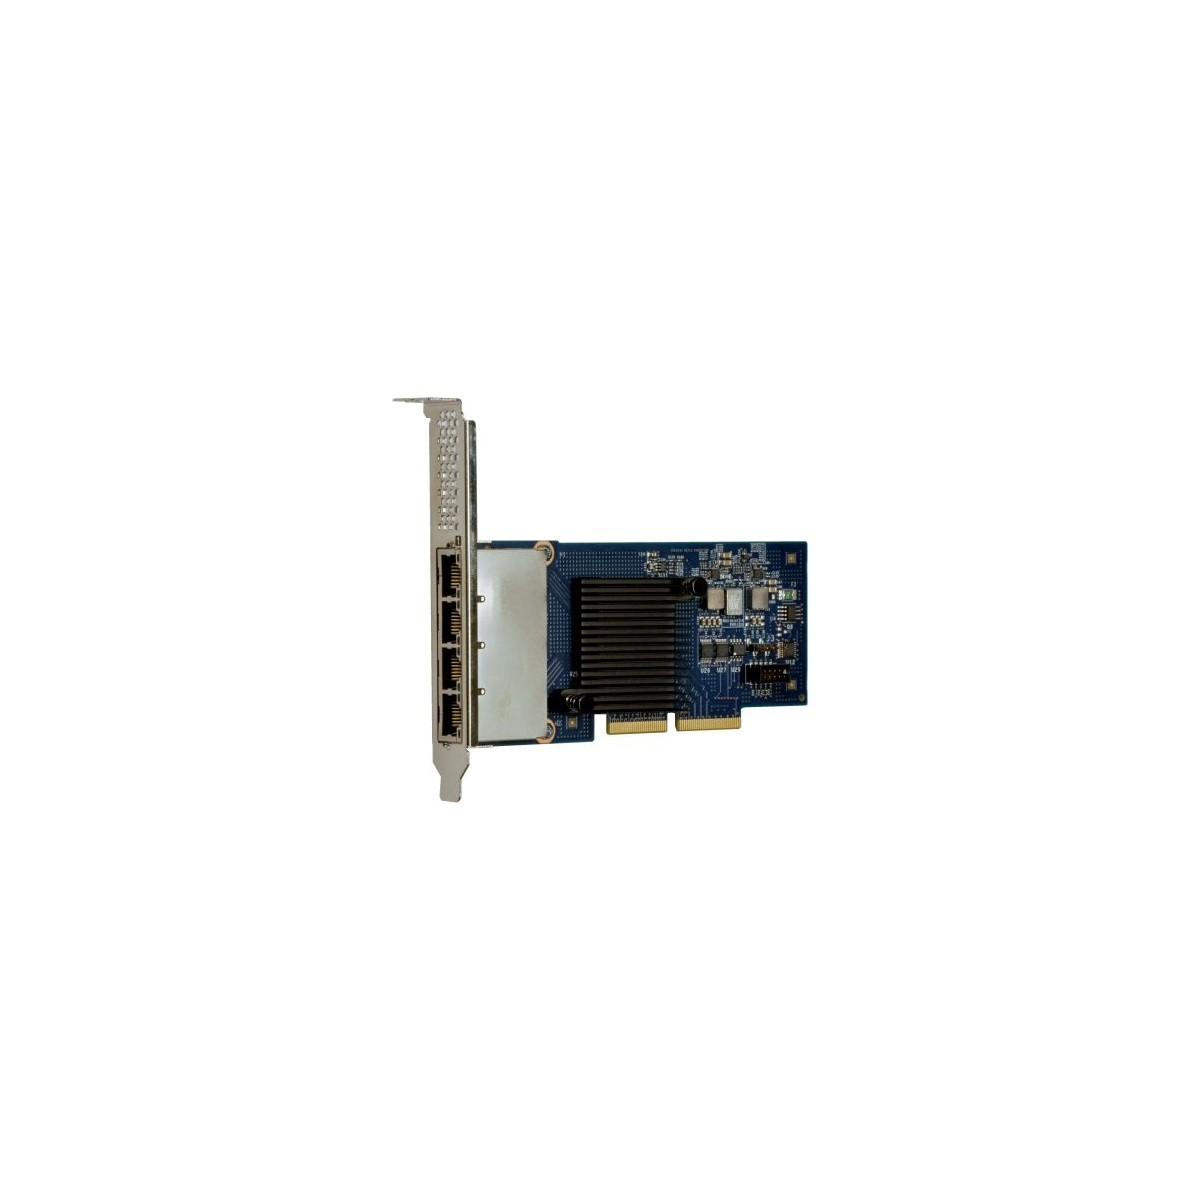 Lenovo I350-T4 ML2 - Internal - Wired - PCI Express - Ethernet - 1000 Mbit/s - Aluminum - Black - Blue